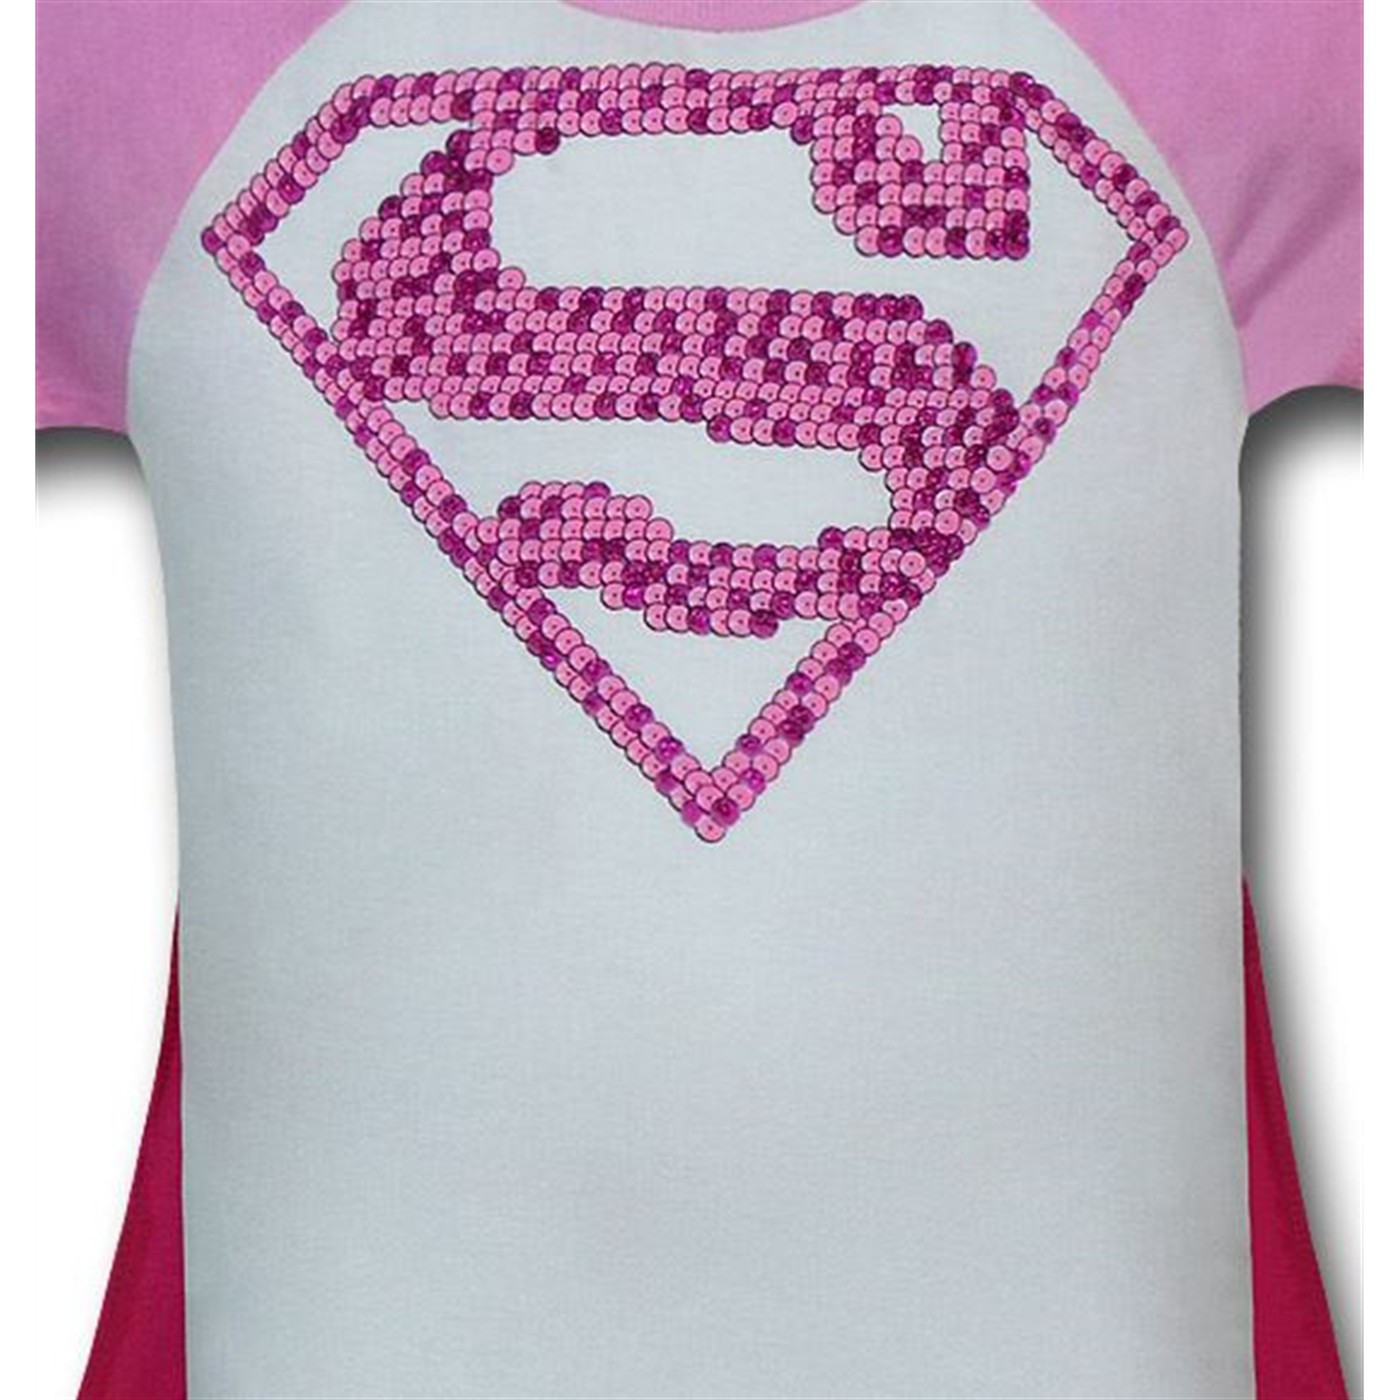 Supergirl Kids Sugar Glitter Caped T-Shirt